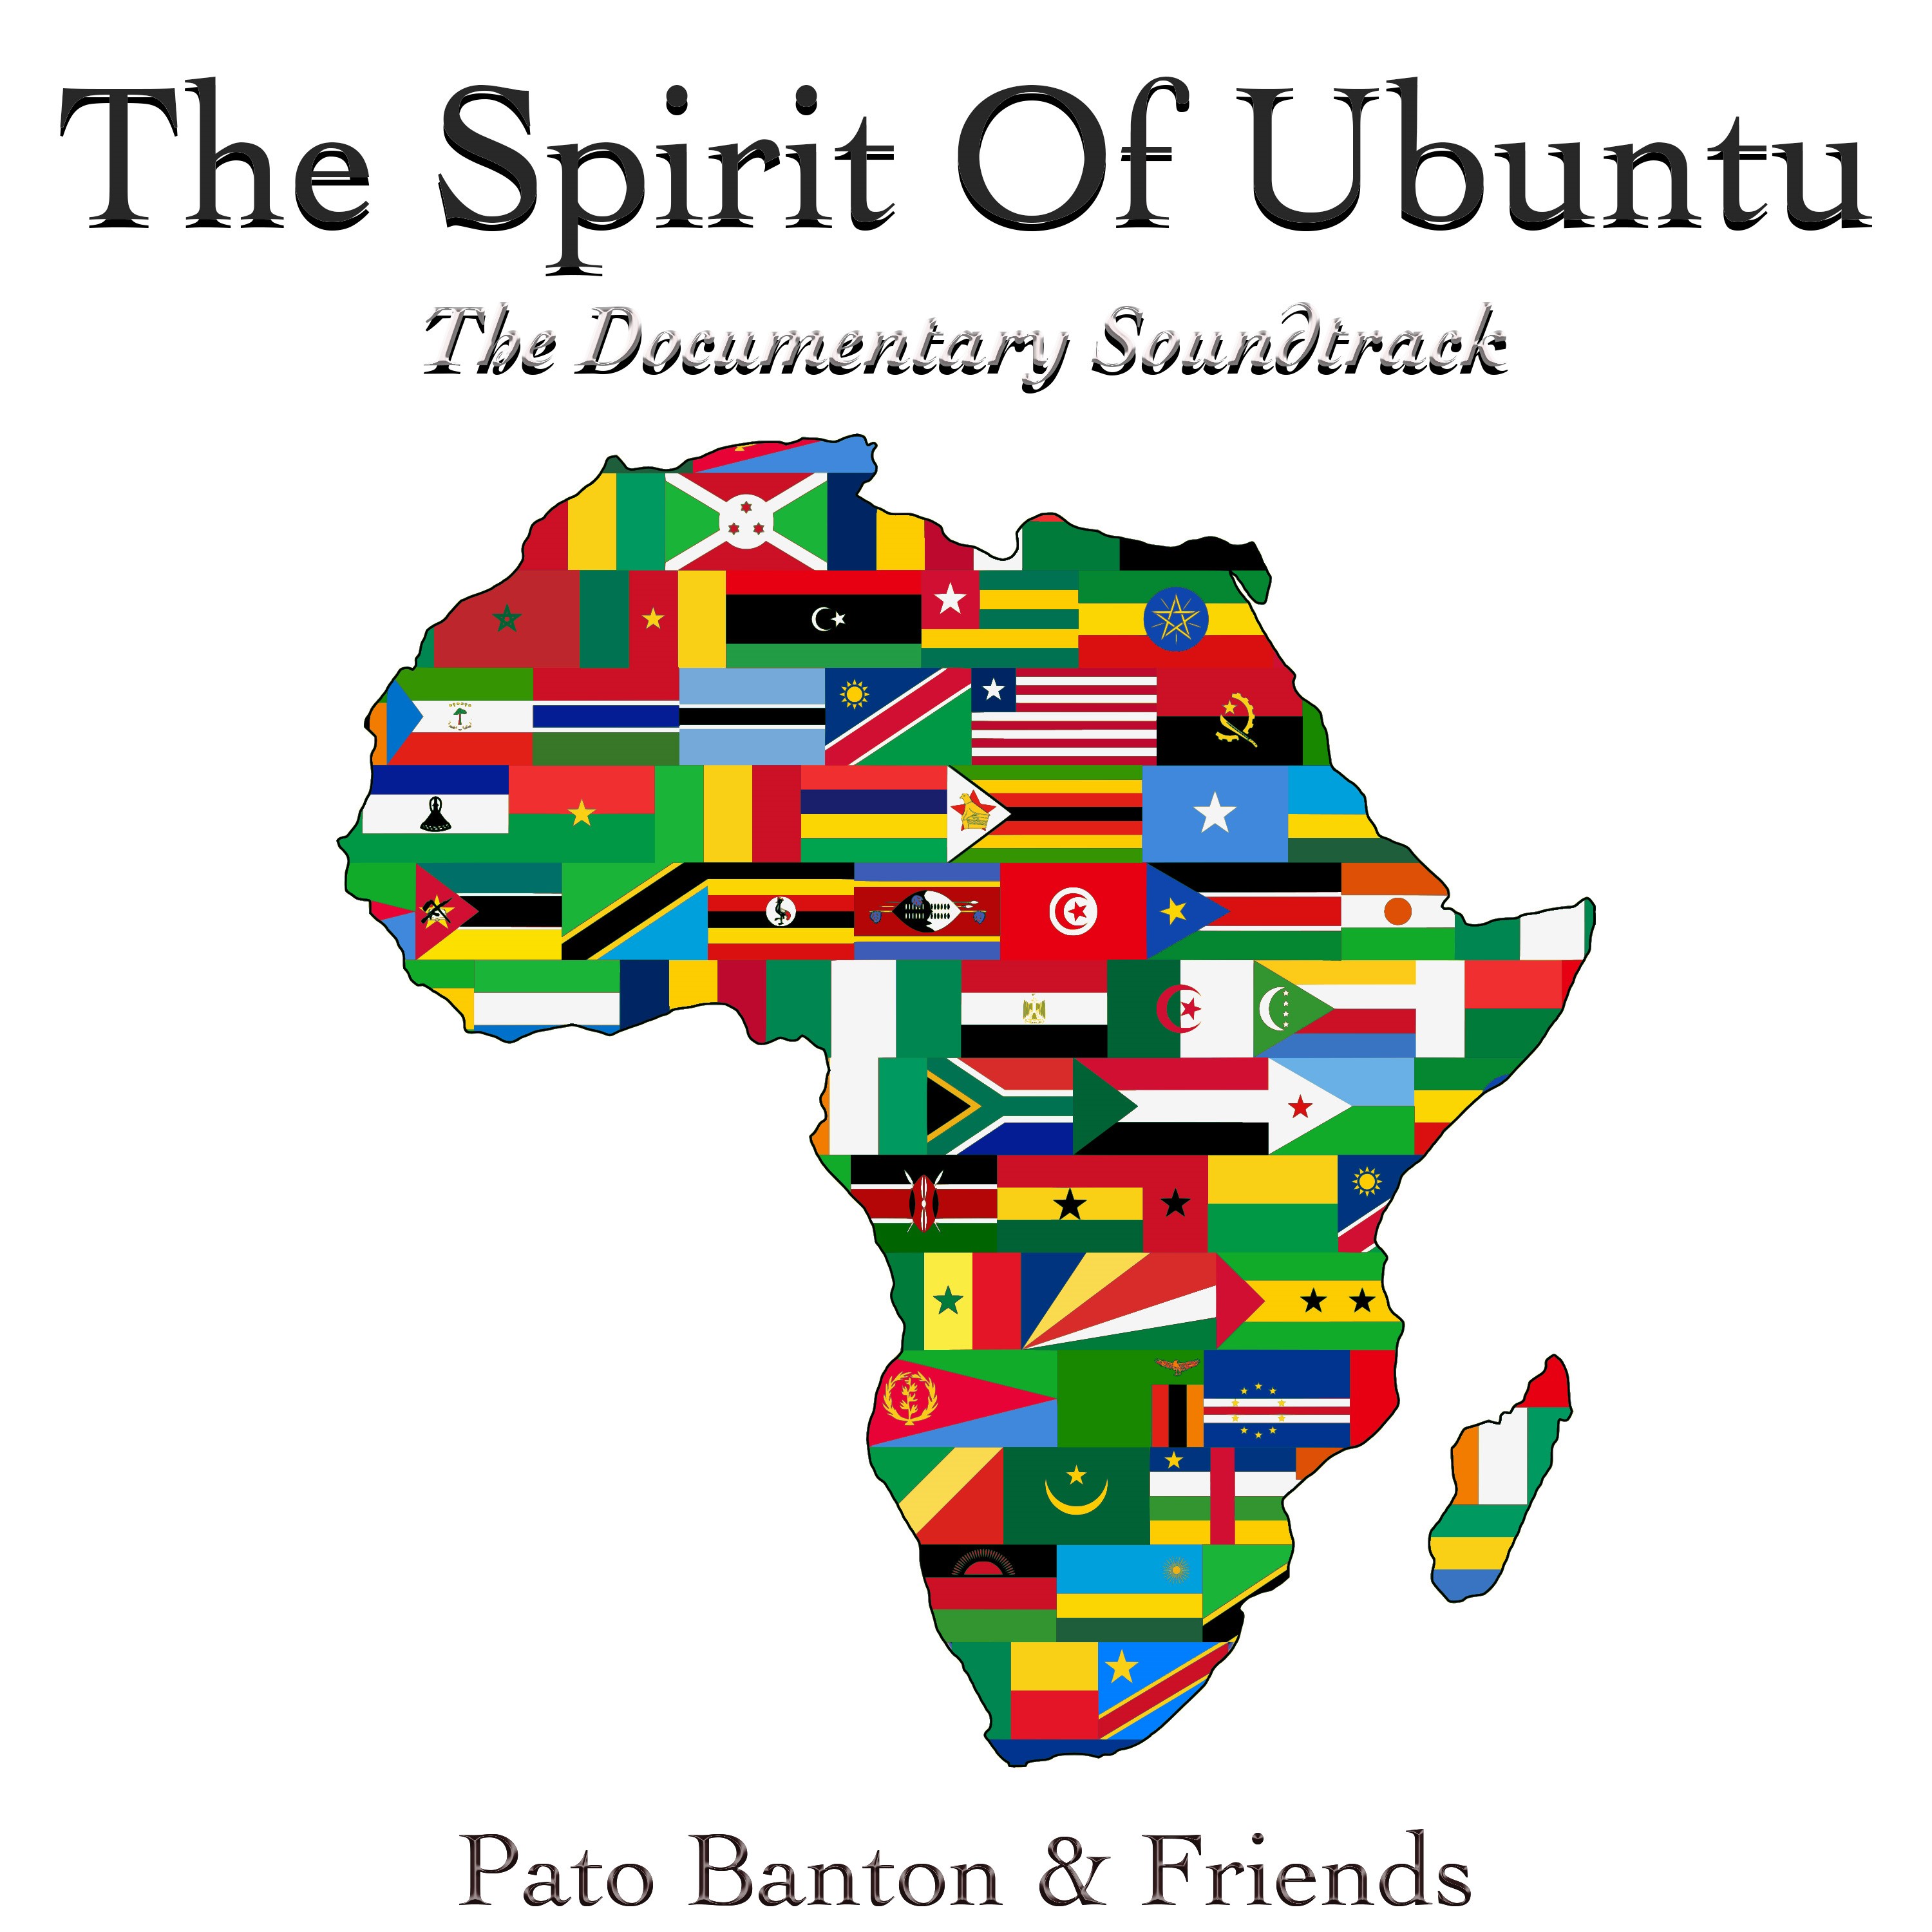 The Spirit of Ubuntu Documentary Soundtrack - Pato Banton and Friends